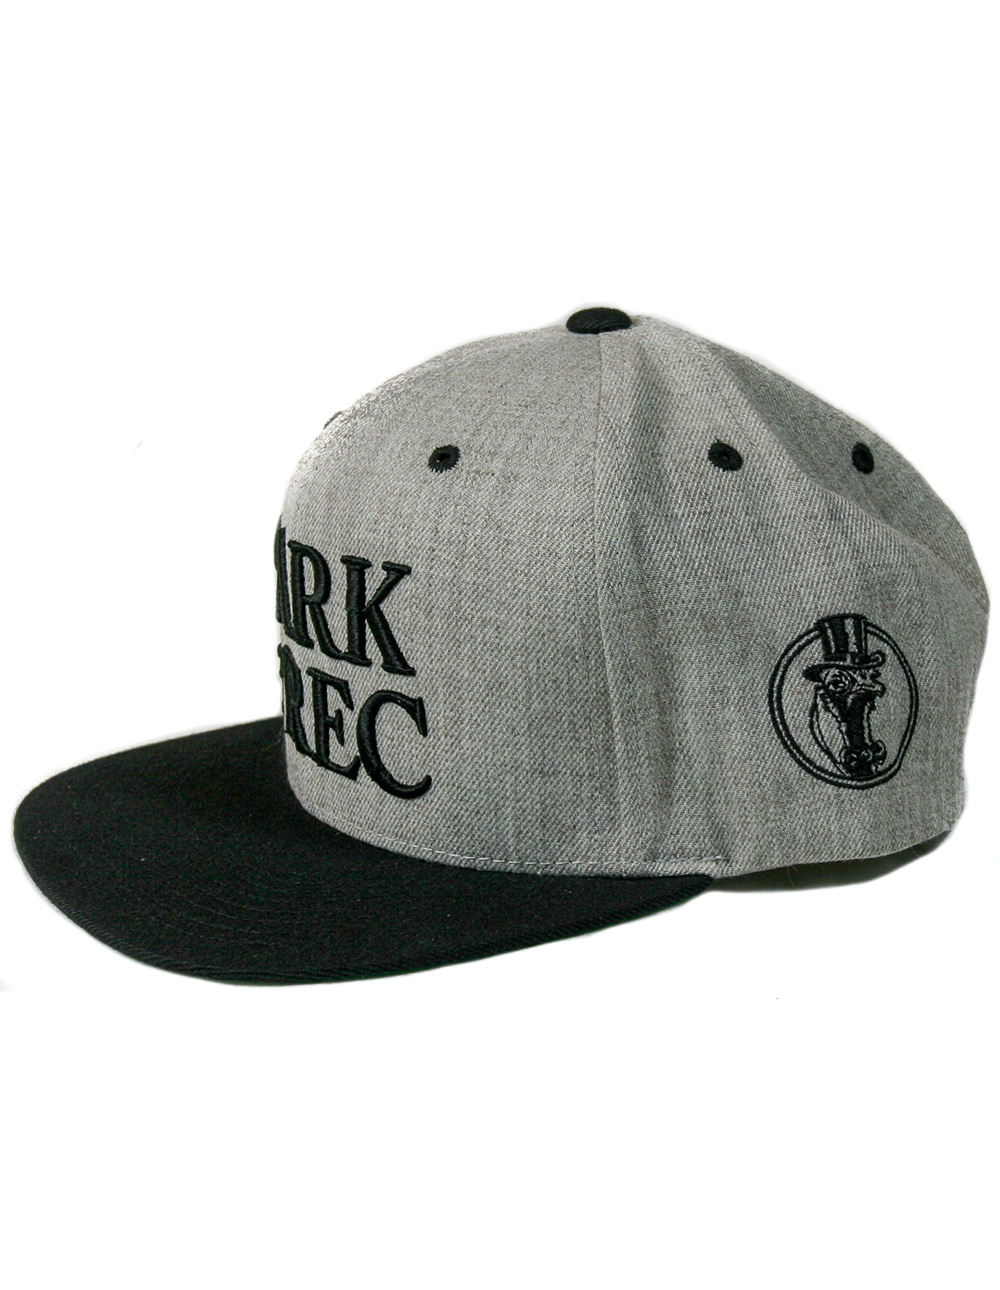 Art and Ink Park & Rec Branded Cap